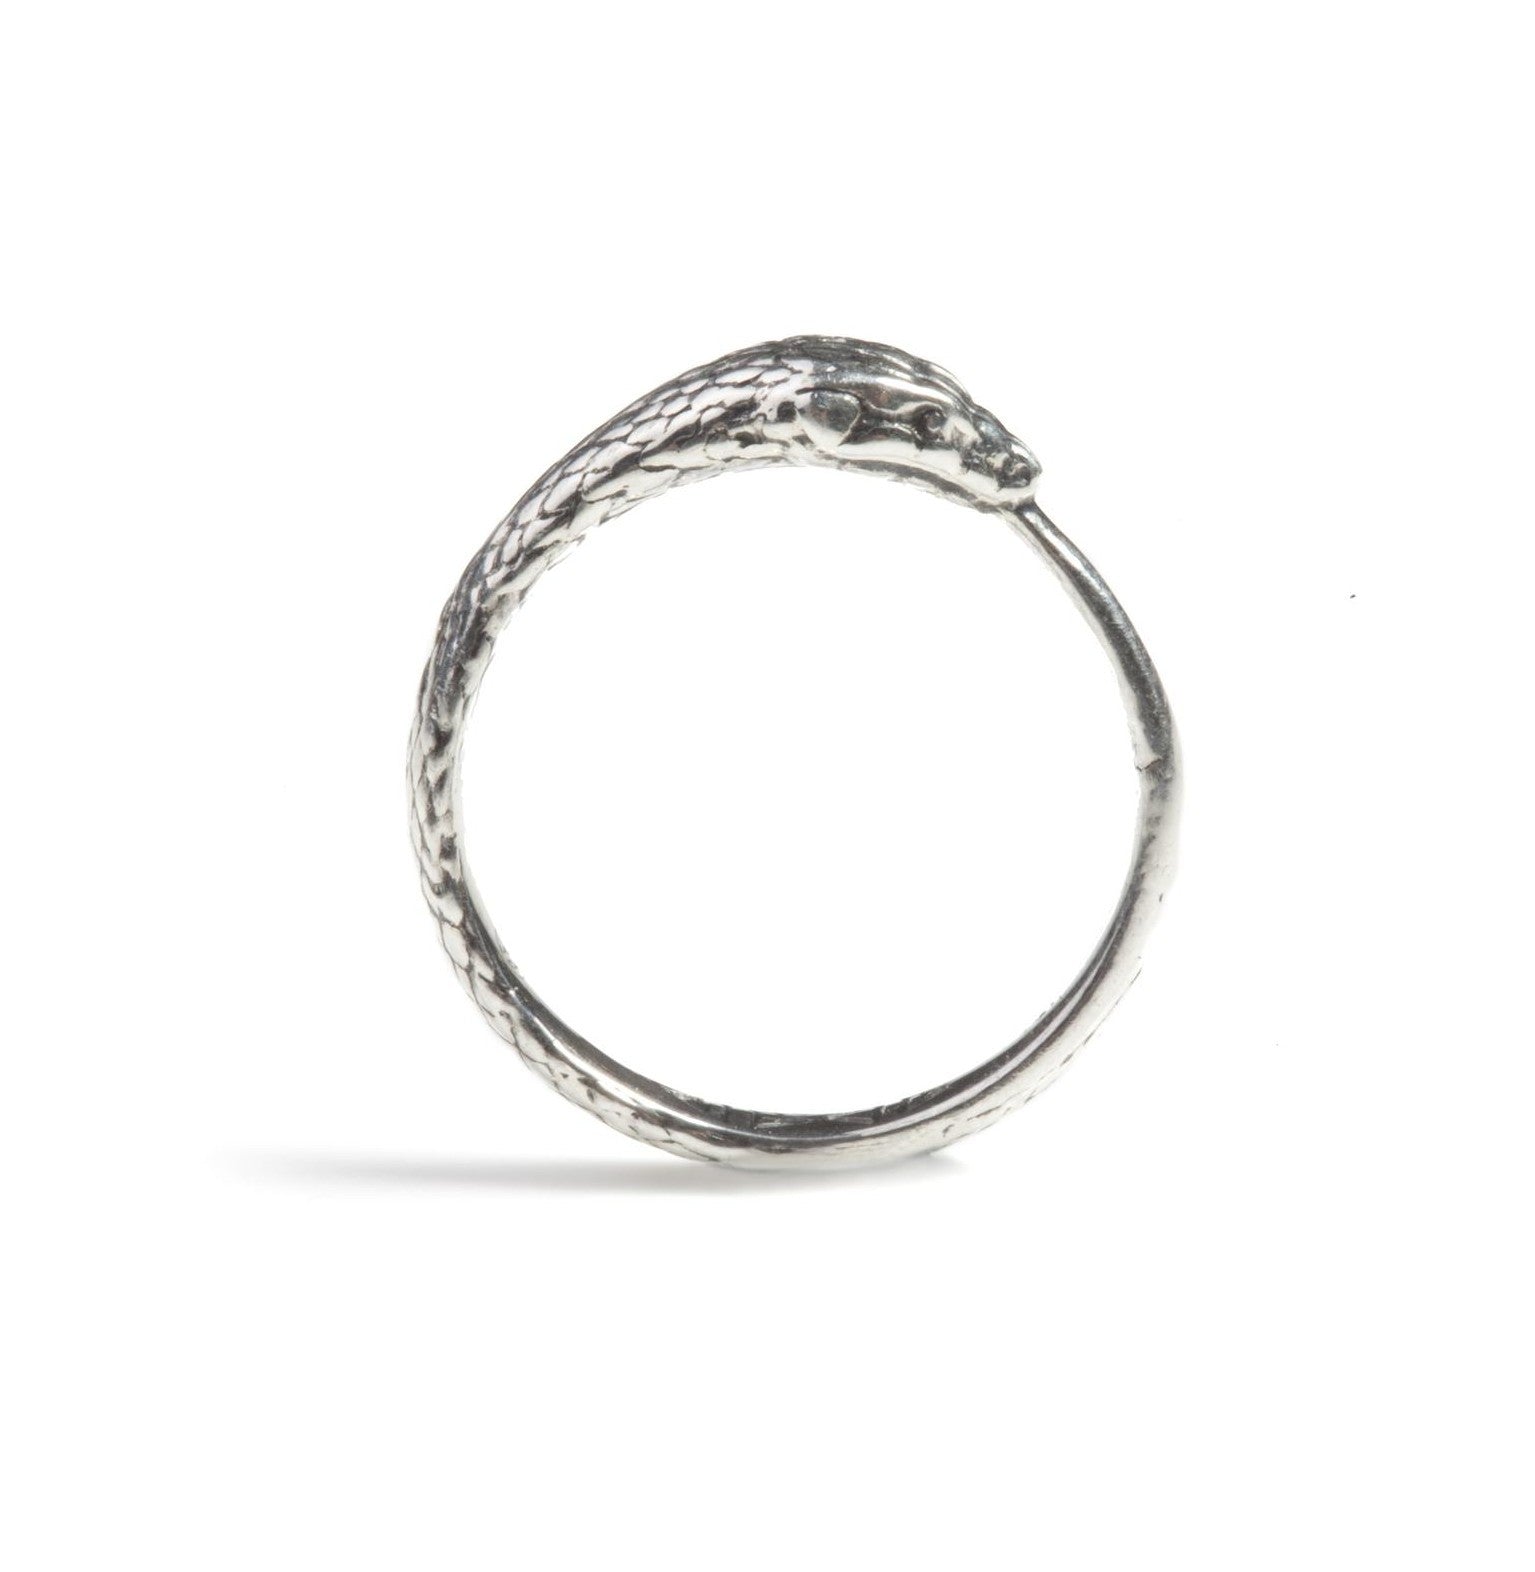 rachel-entwistle-ouroboros-snake-ring-silver-1